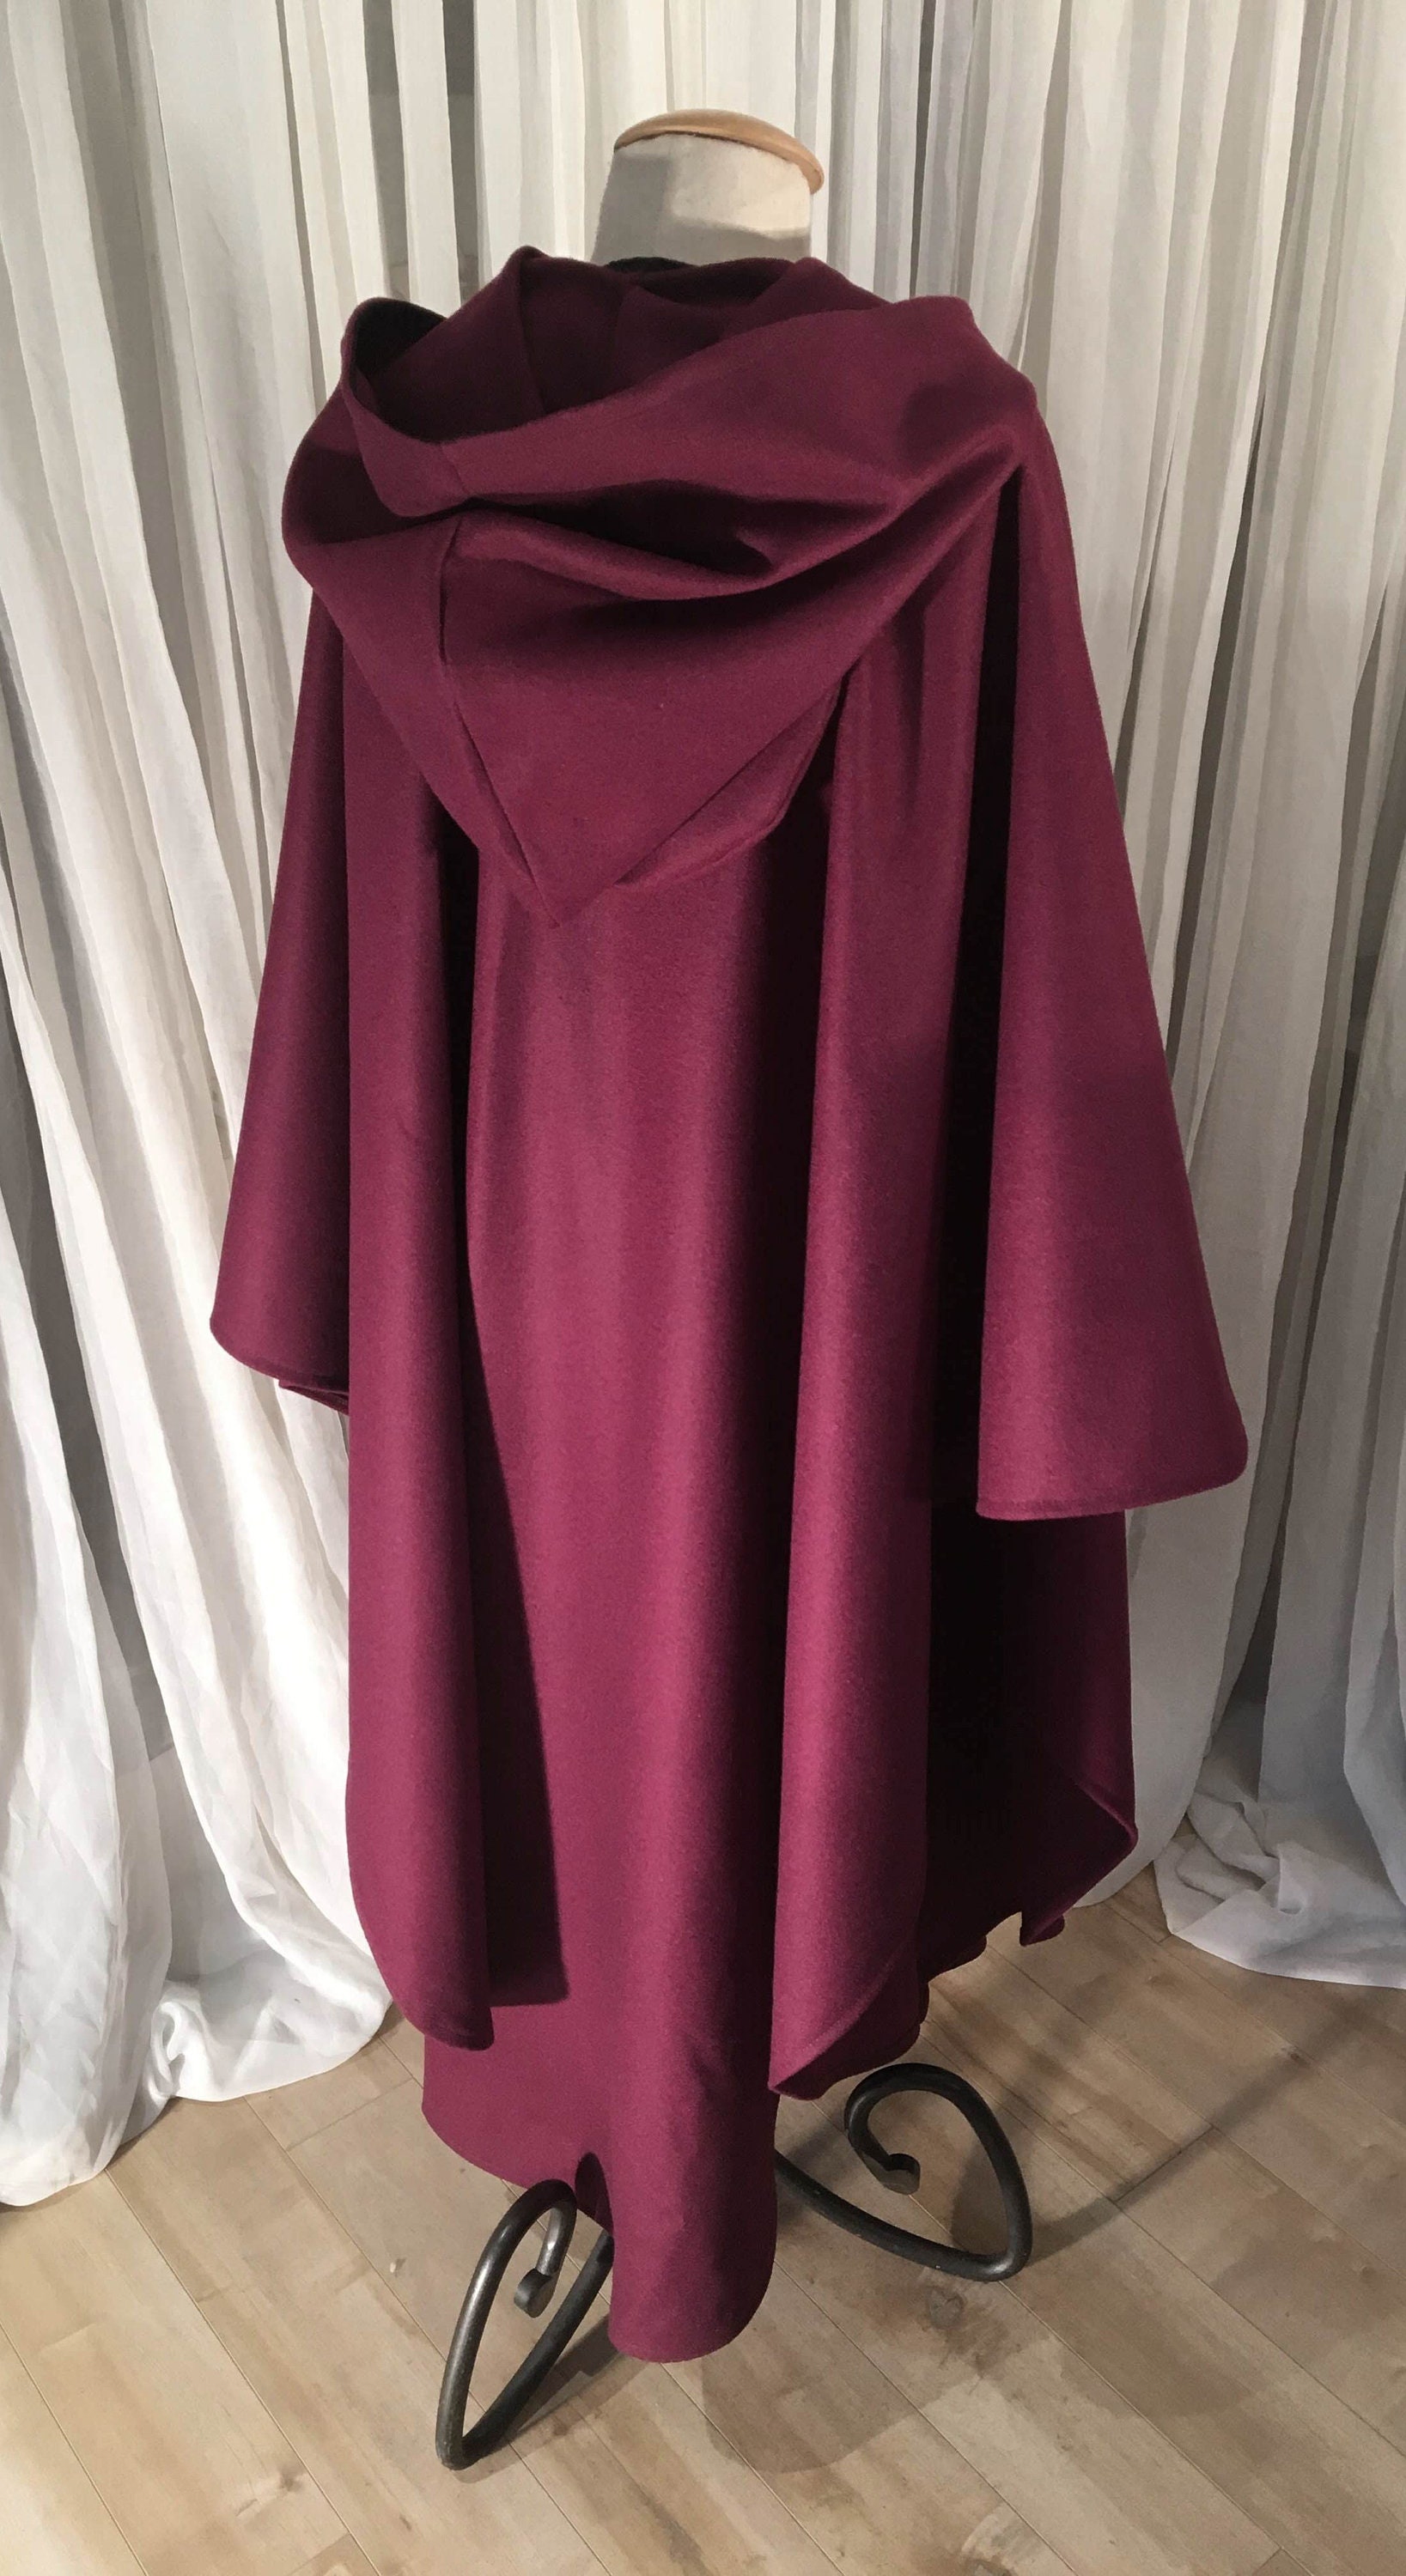 Wine burgundy wool cloak full oval YOUR LENGTH | Etsy